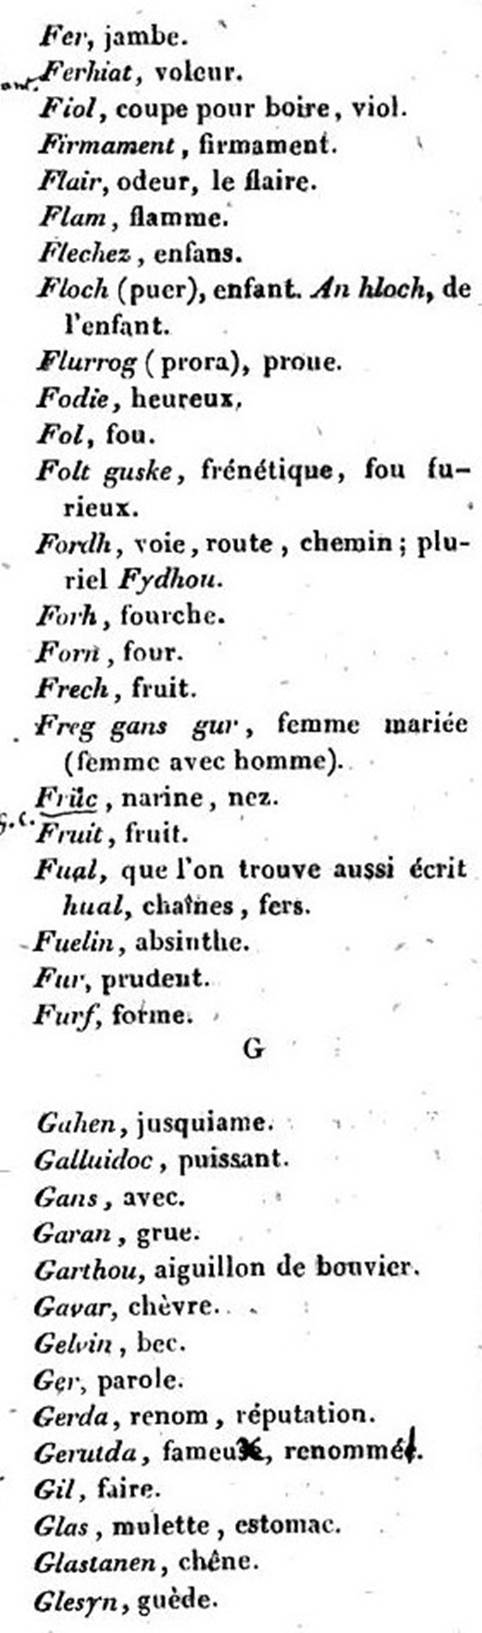 F3840b_antoine-matthieu-sionnet_1808-1856_langue-bretonne_430.jpg